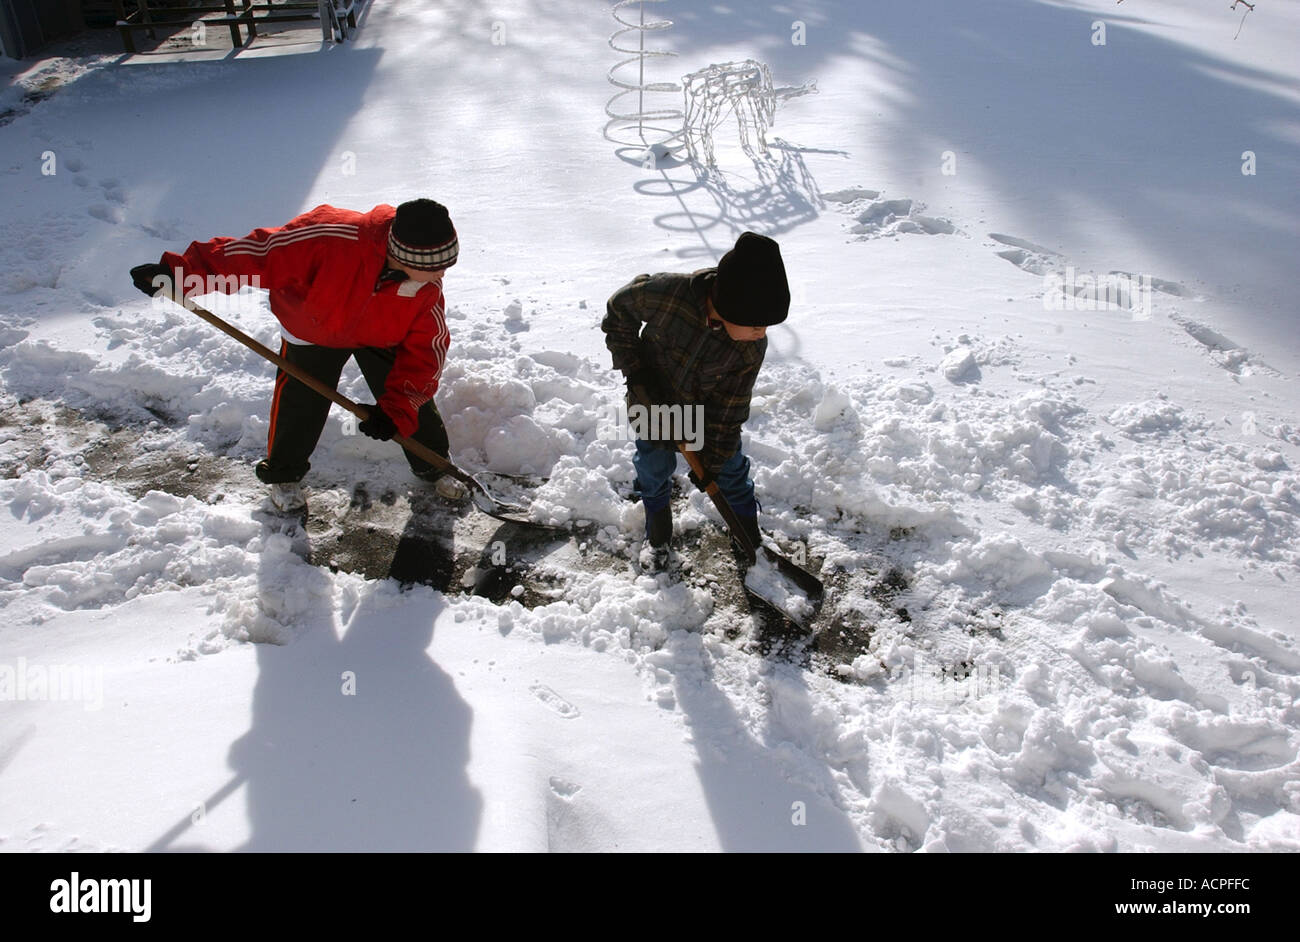 Two boys shoveling snow shovel snow Stock Photo